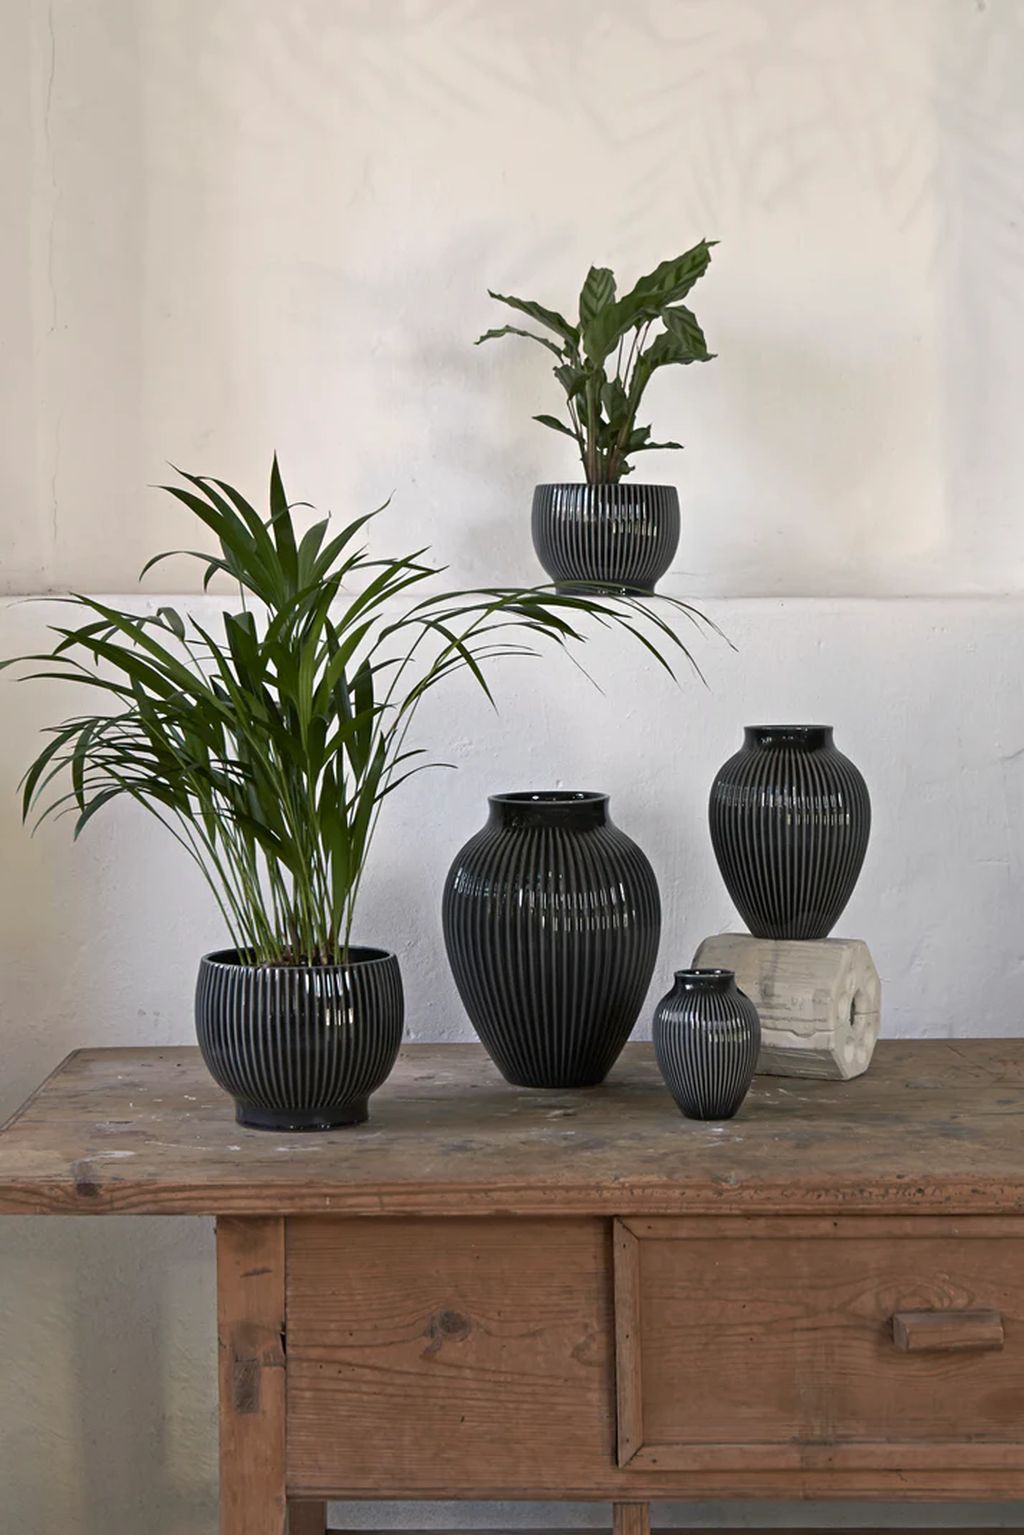 Krabstrup Keramik Flowerpot con ruote Ø 16,5 cm, nero